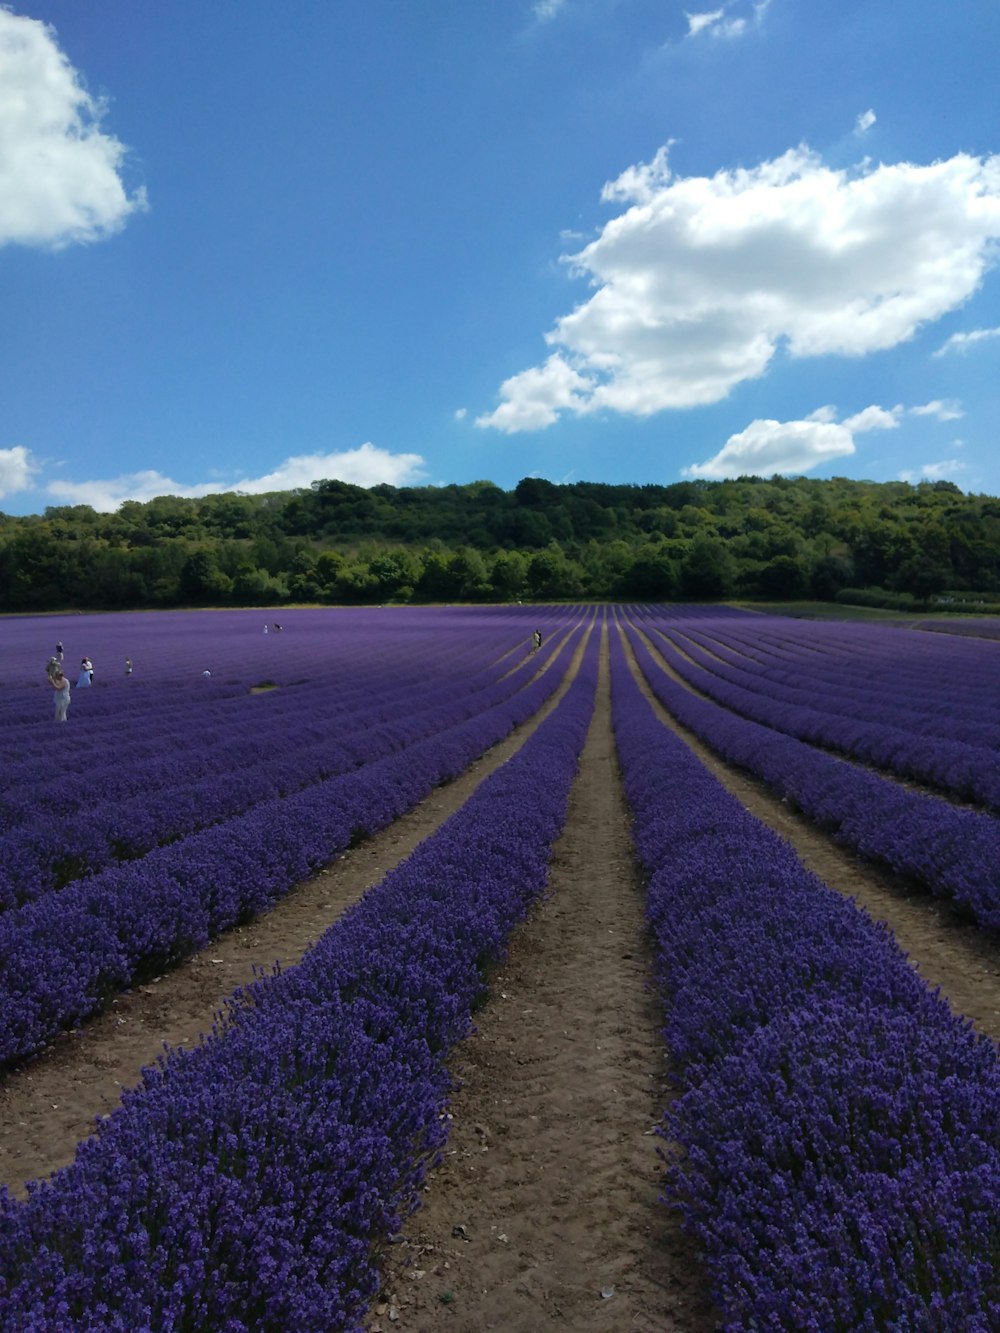 rows of purple flowers